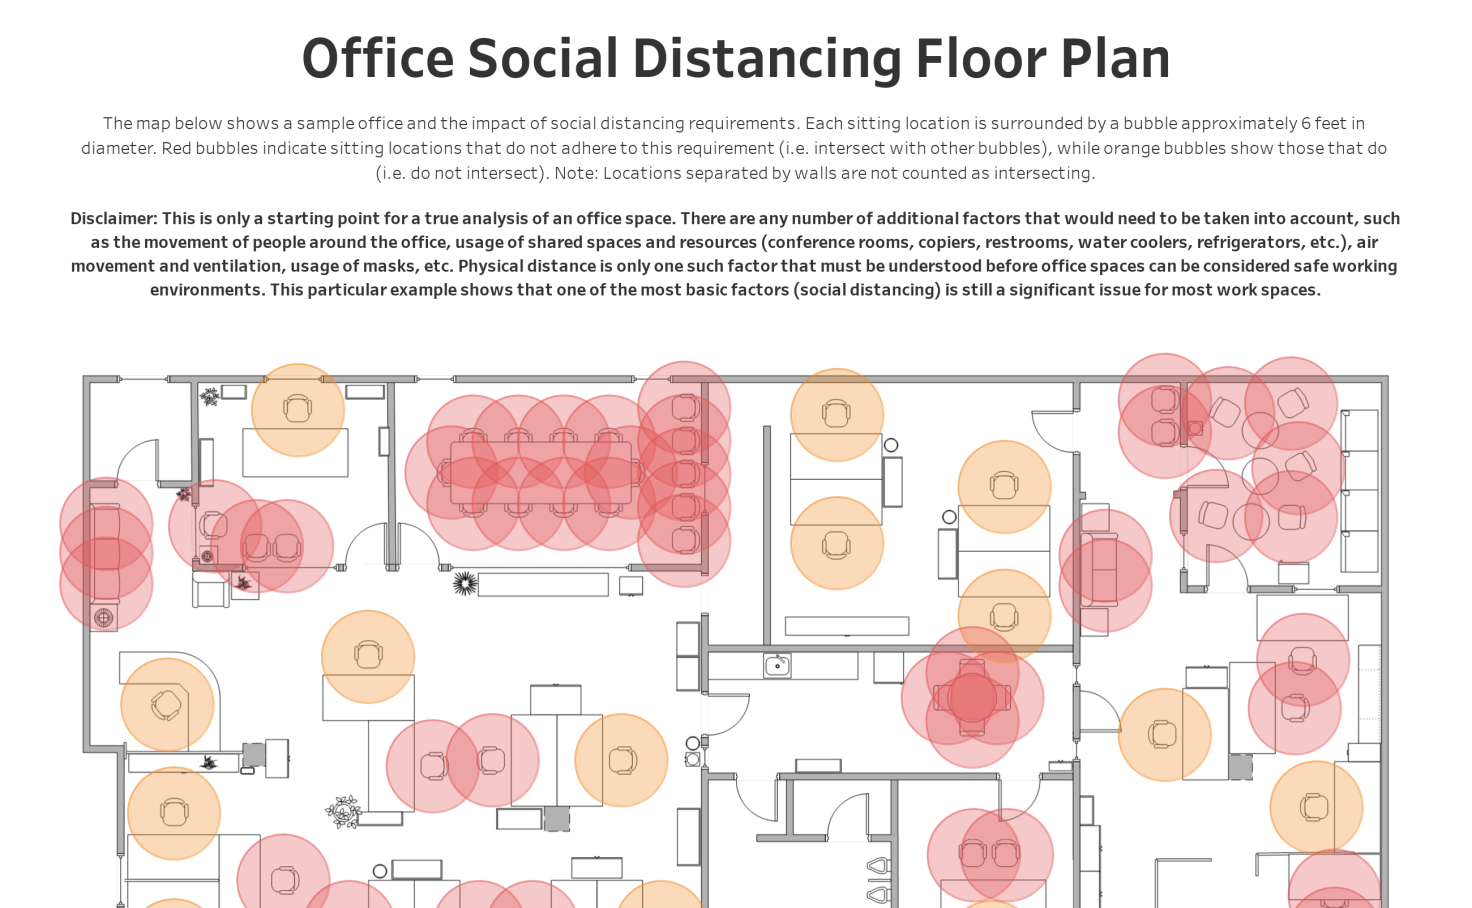 Office Social Distancing Floor Plan Ken Flerlage Tableau Public